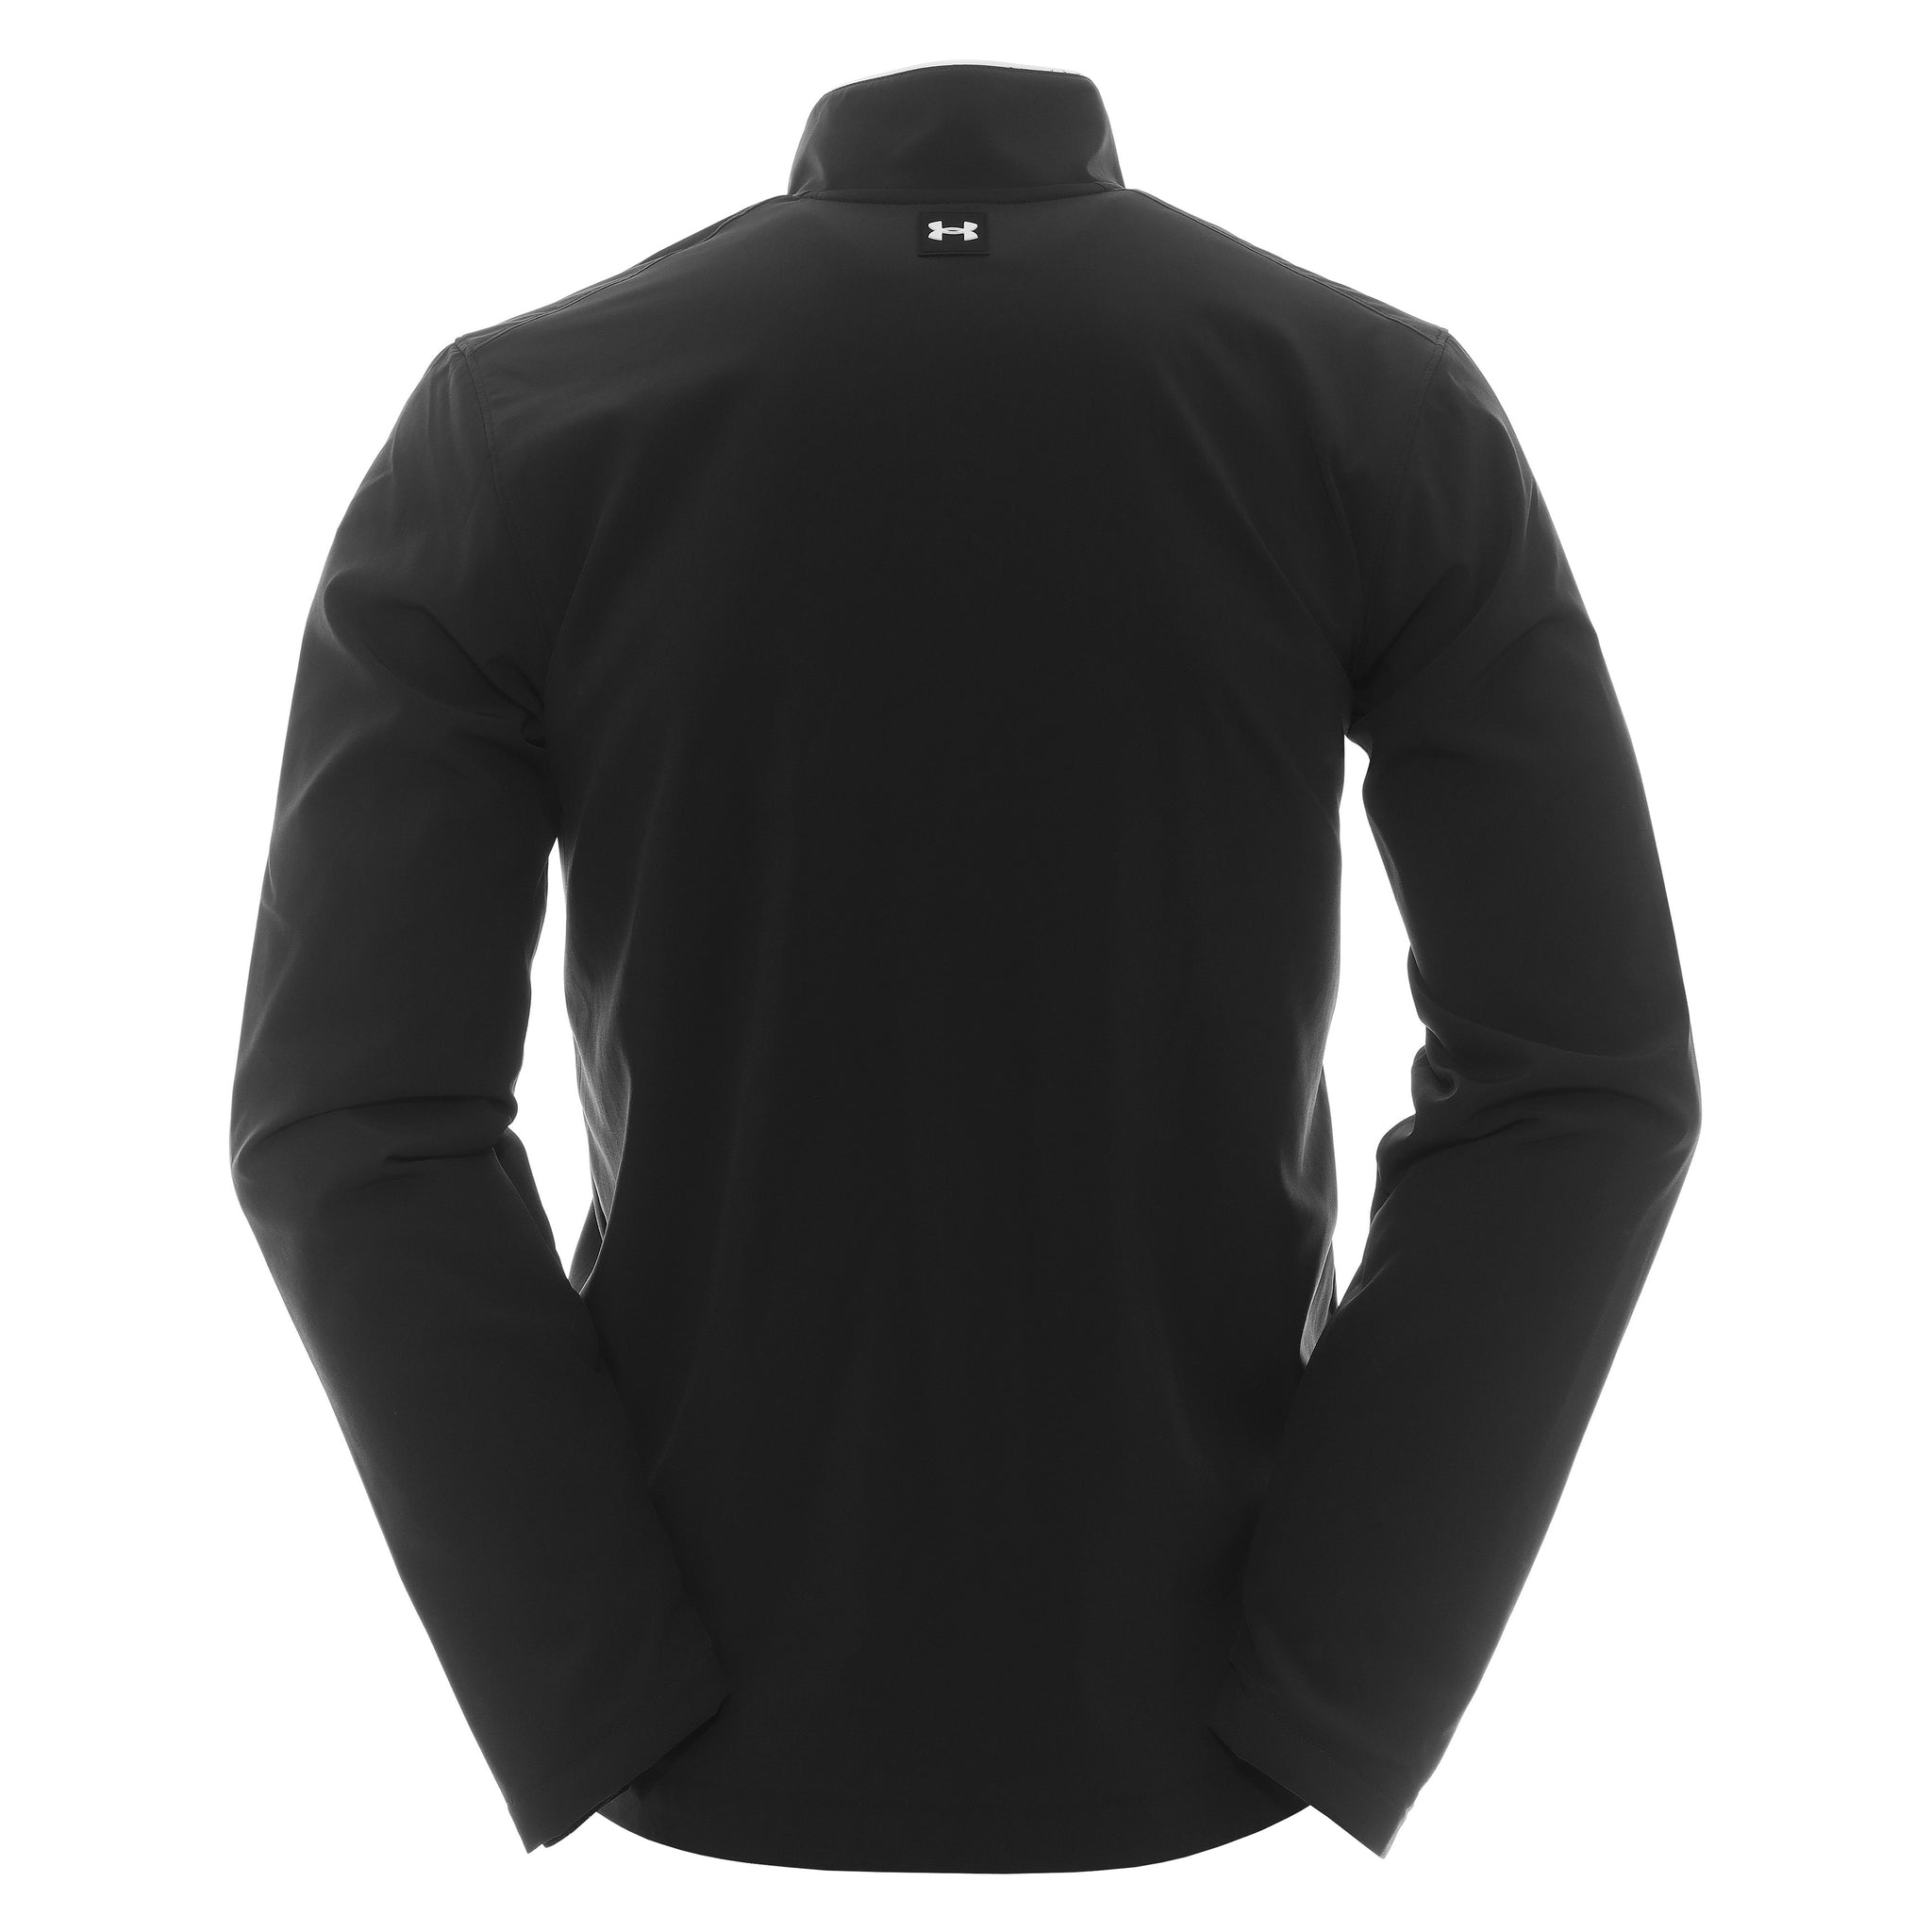 under-armour-golf-storm-revo-jacket-1379721-black-001